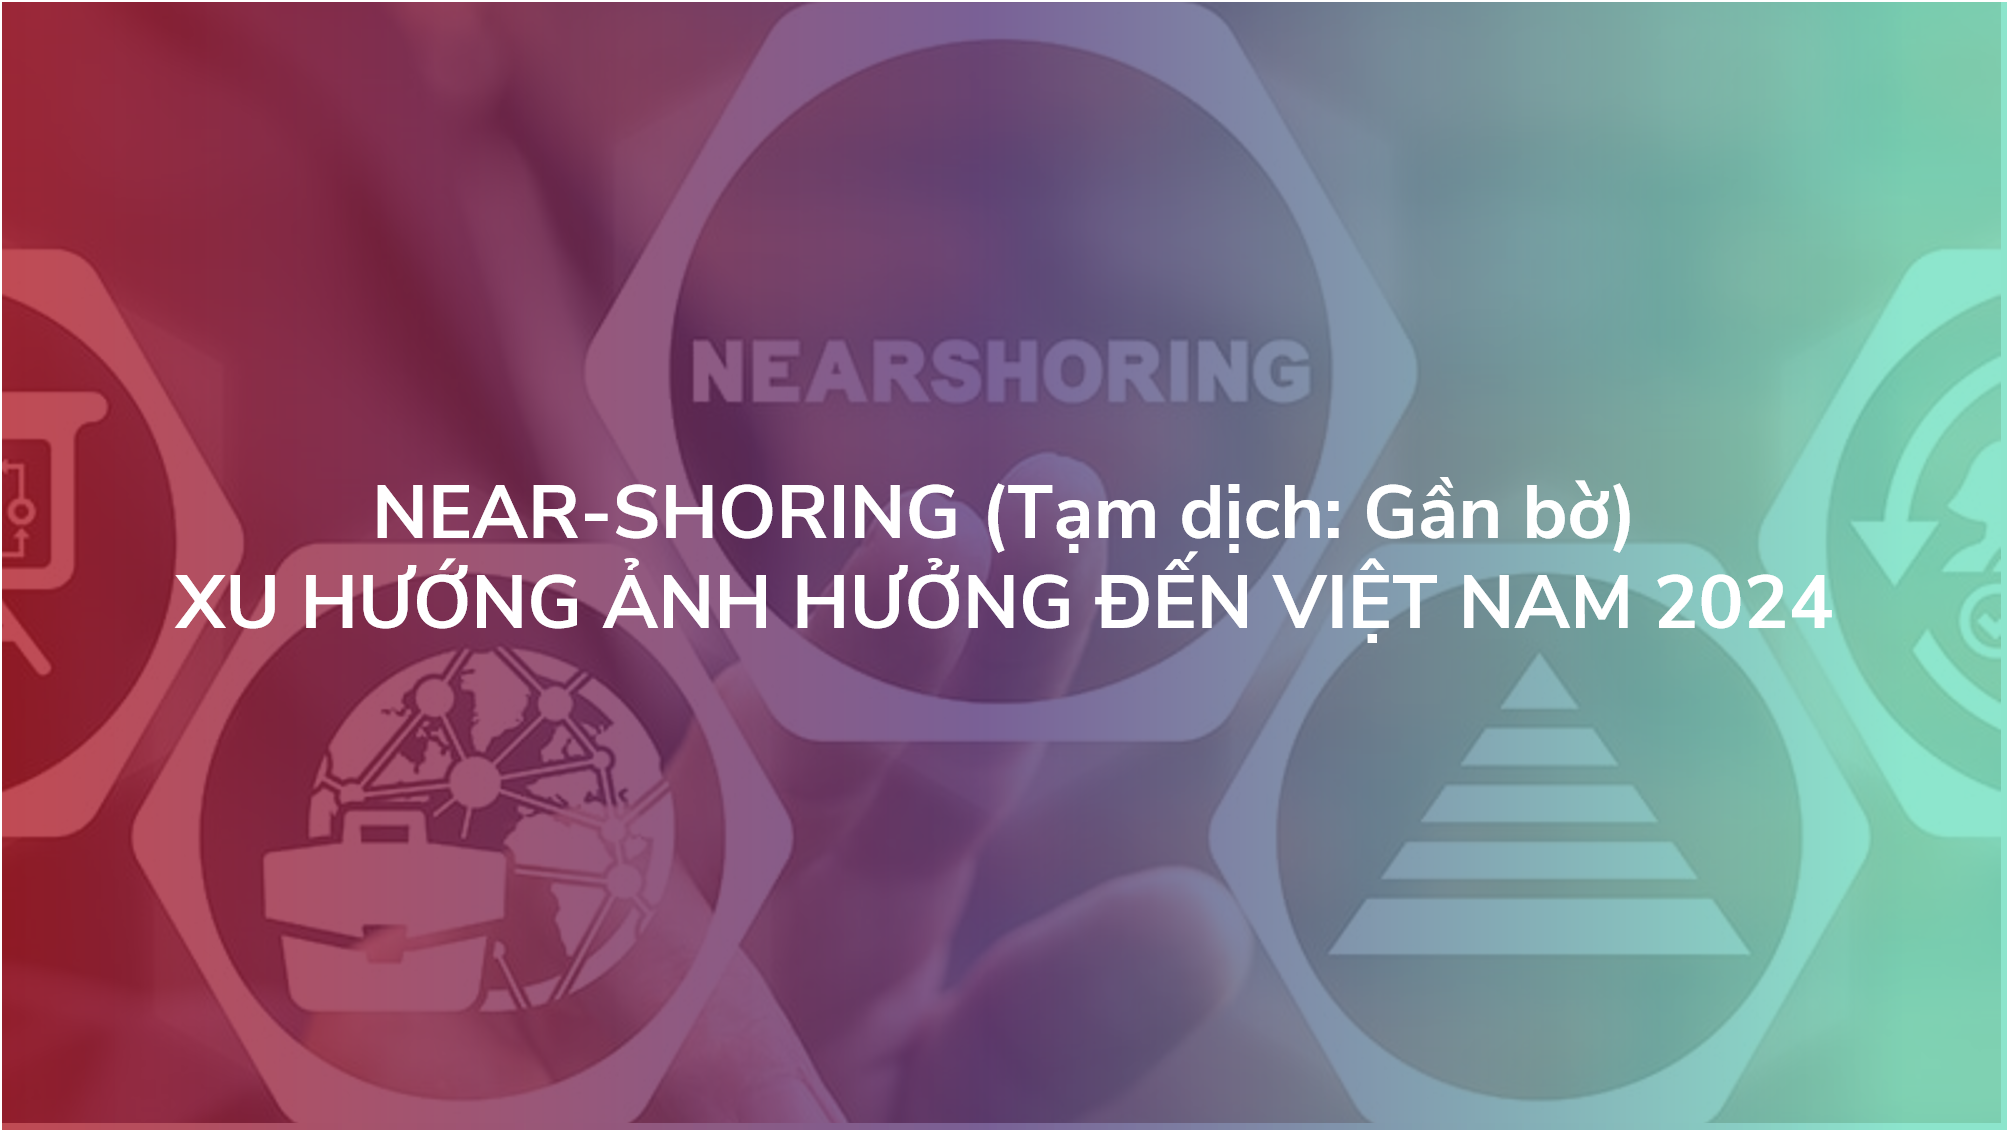 NEAR SHORING XU HUONG ANH HUONG DEN VIET NAM 2024